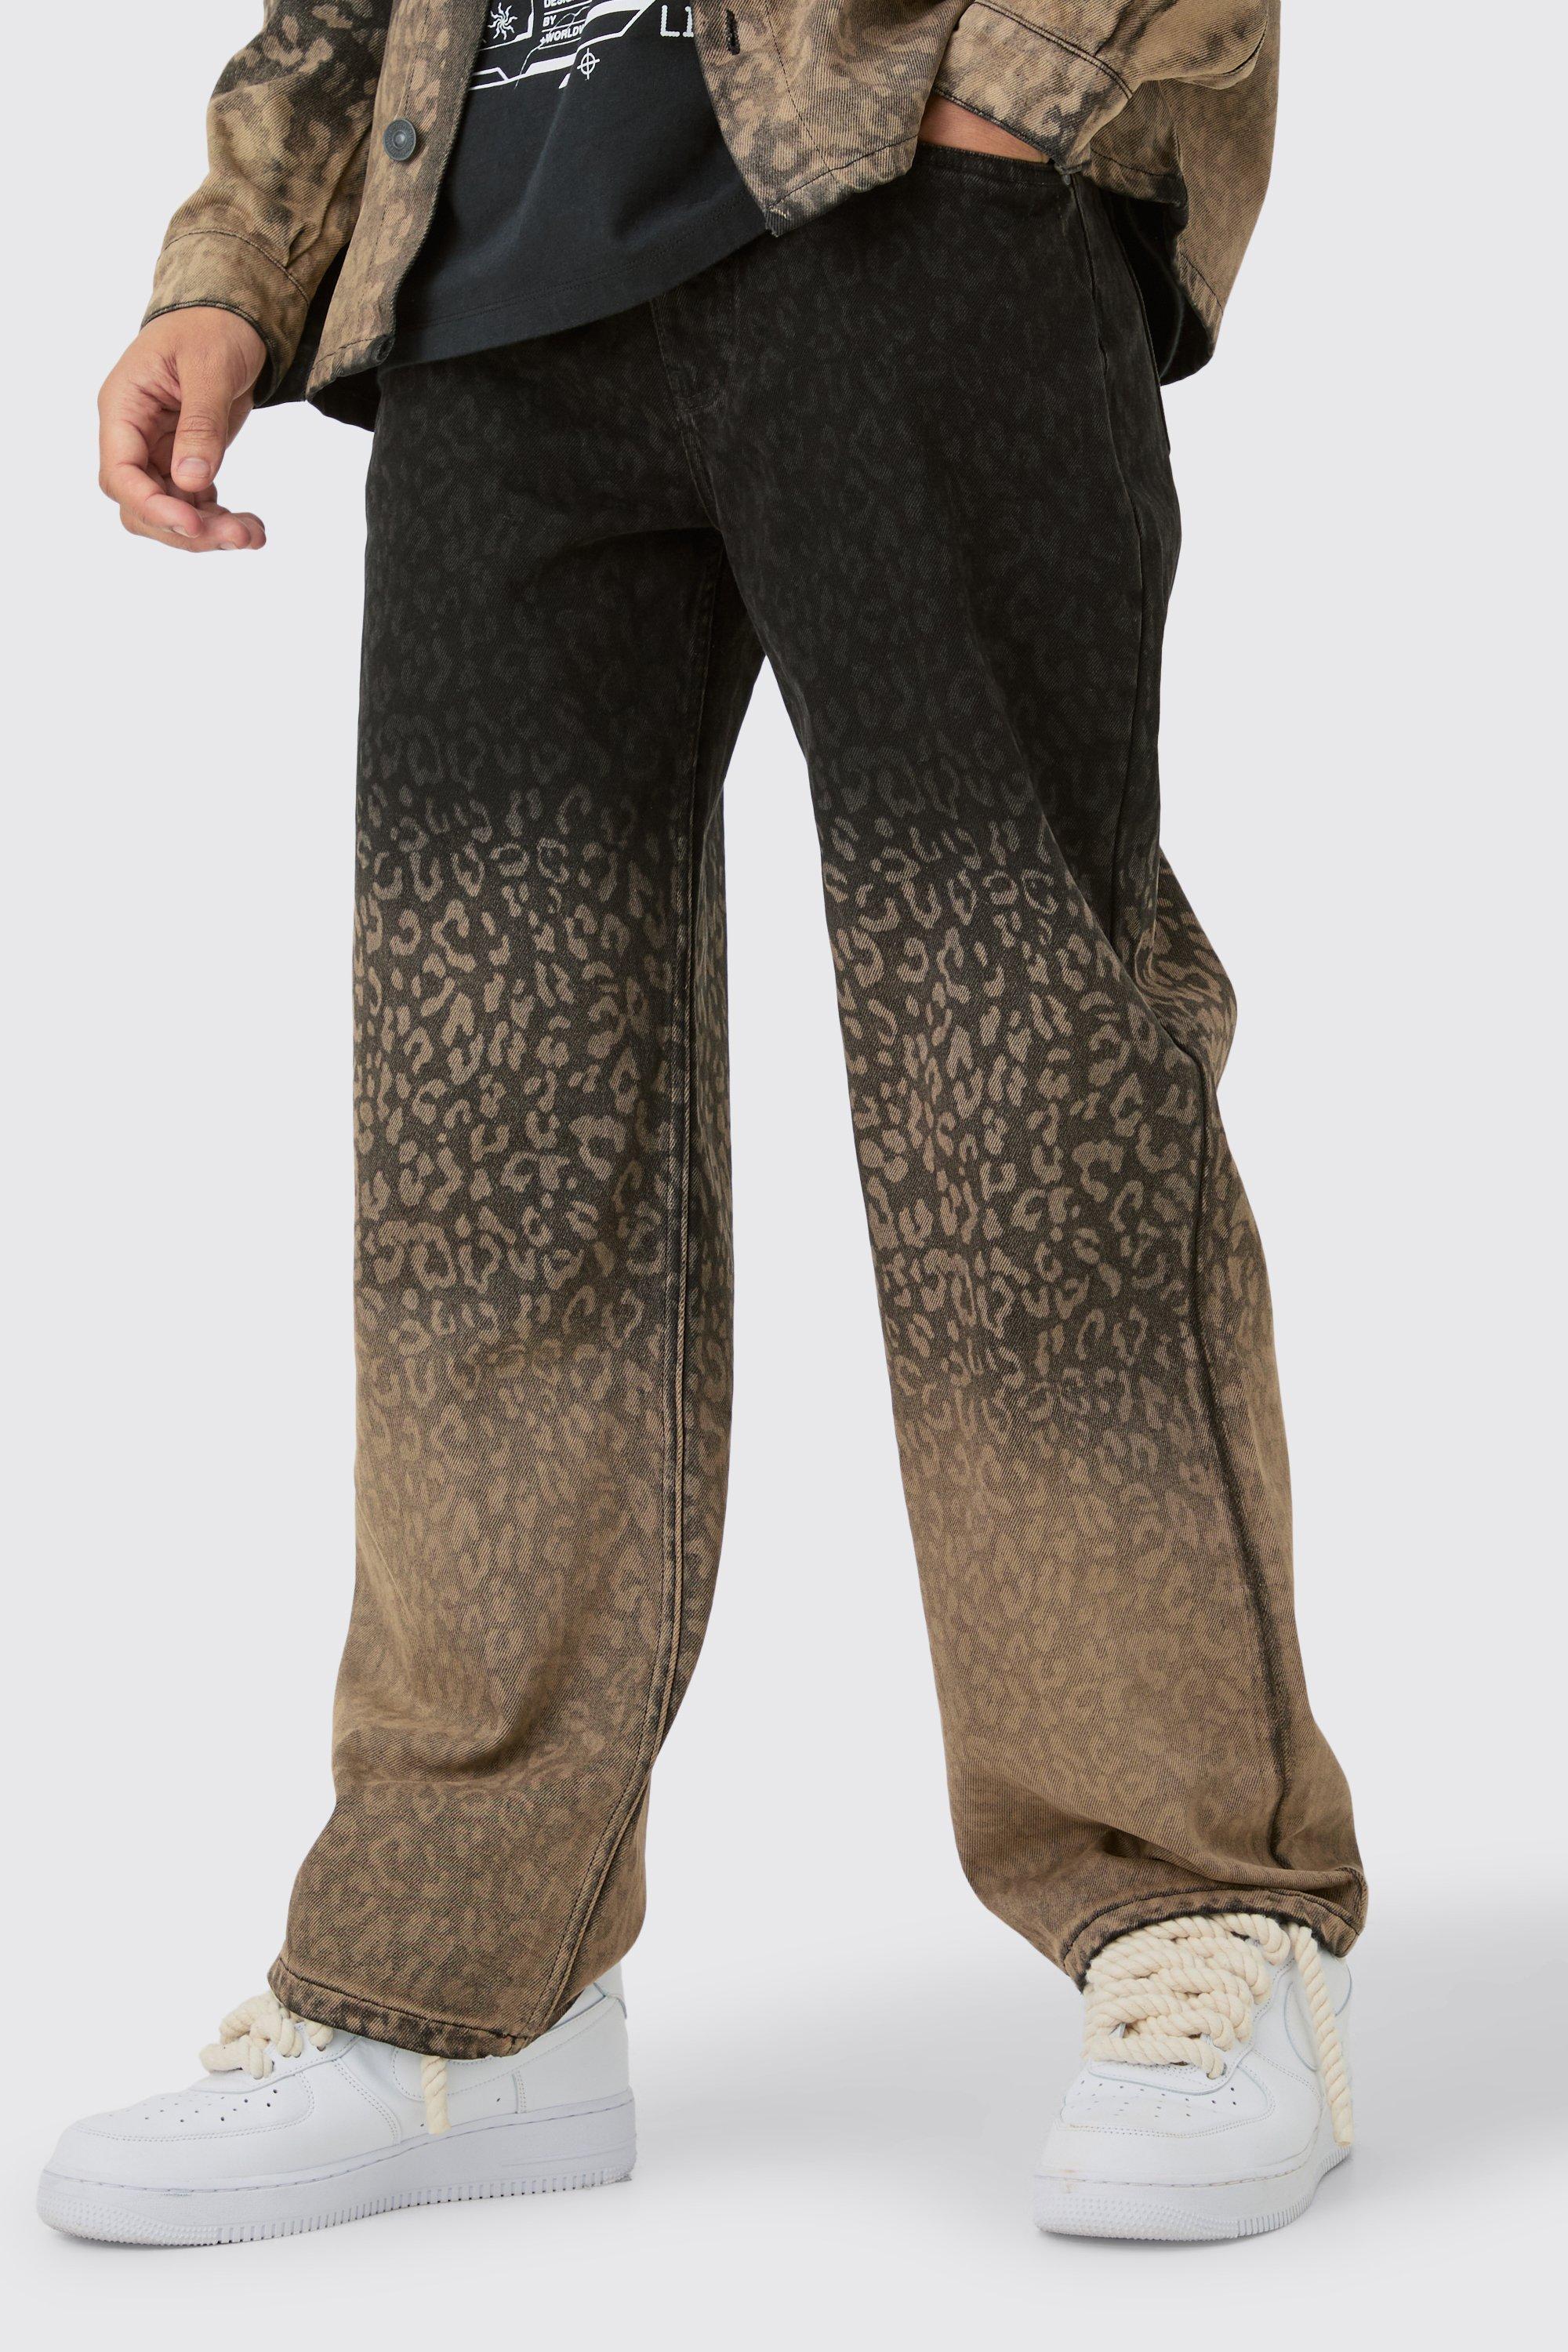 Boohoo Baggy Rigid Leopard Print Jeans In Tinted Black, Black